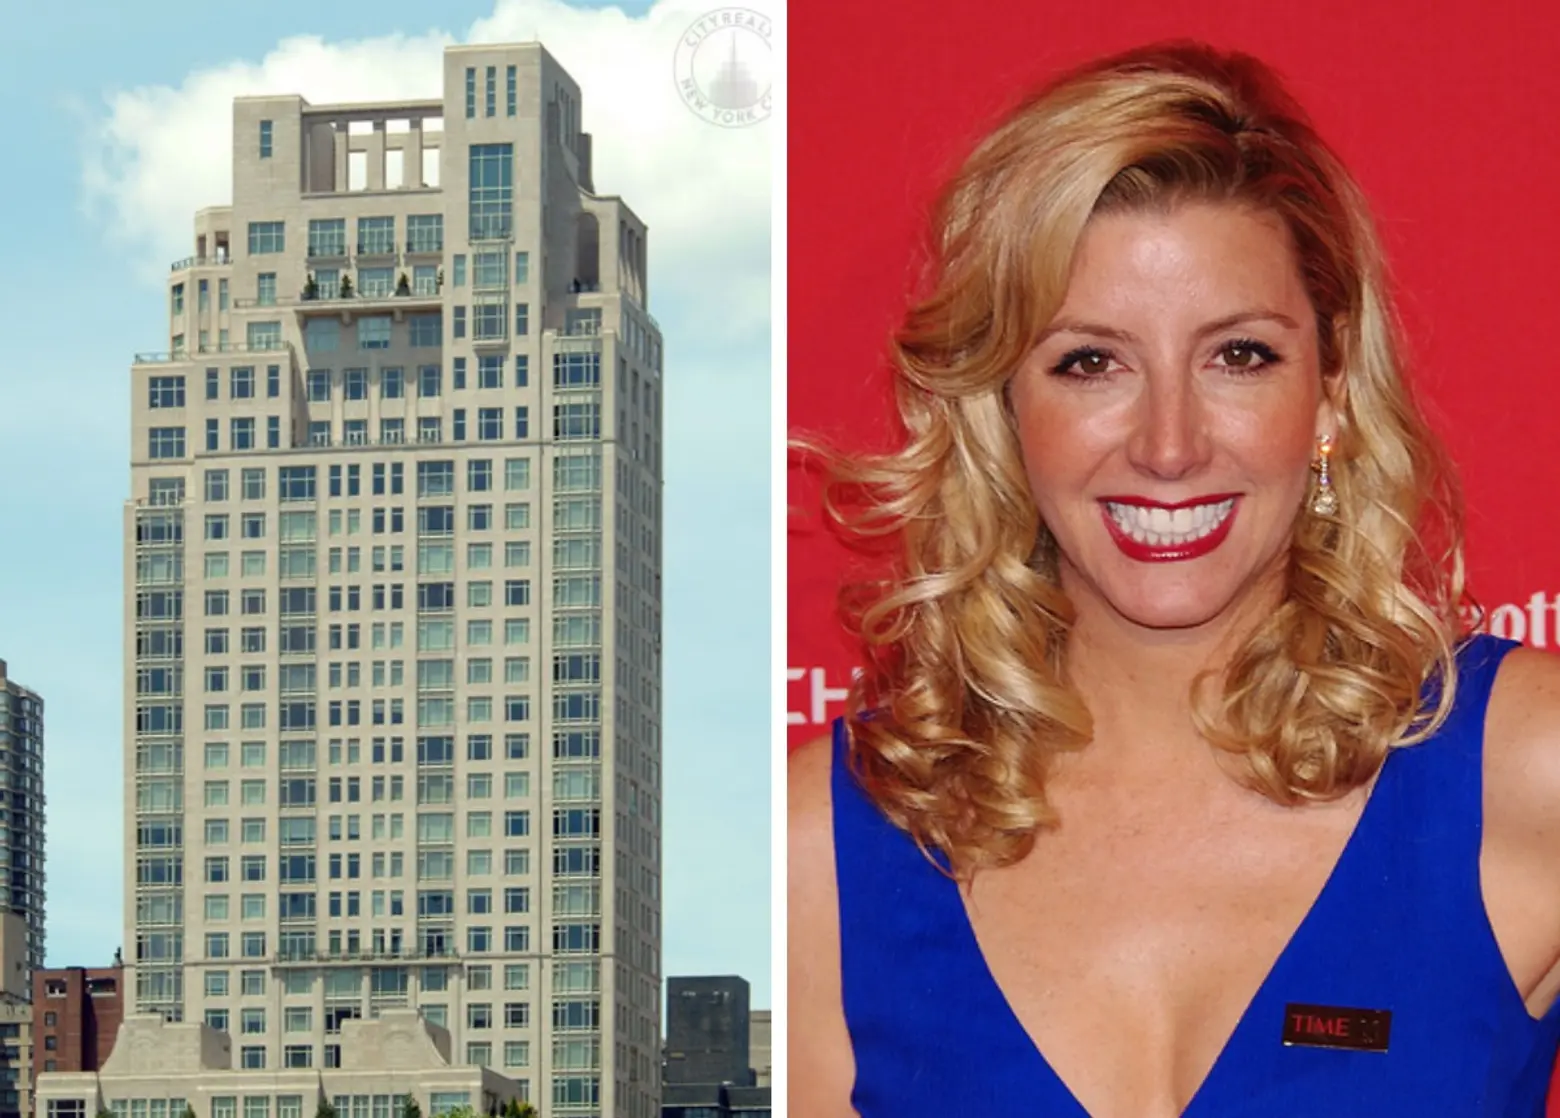 Spanx Founder Sara Blakely Makes $18 Million Profit on 15 Central Park West Apartment Sale